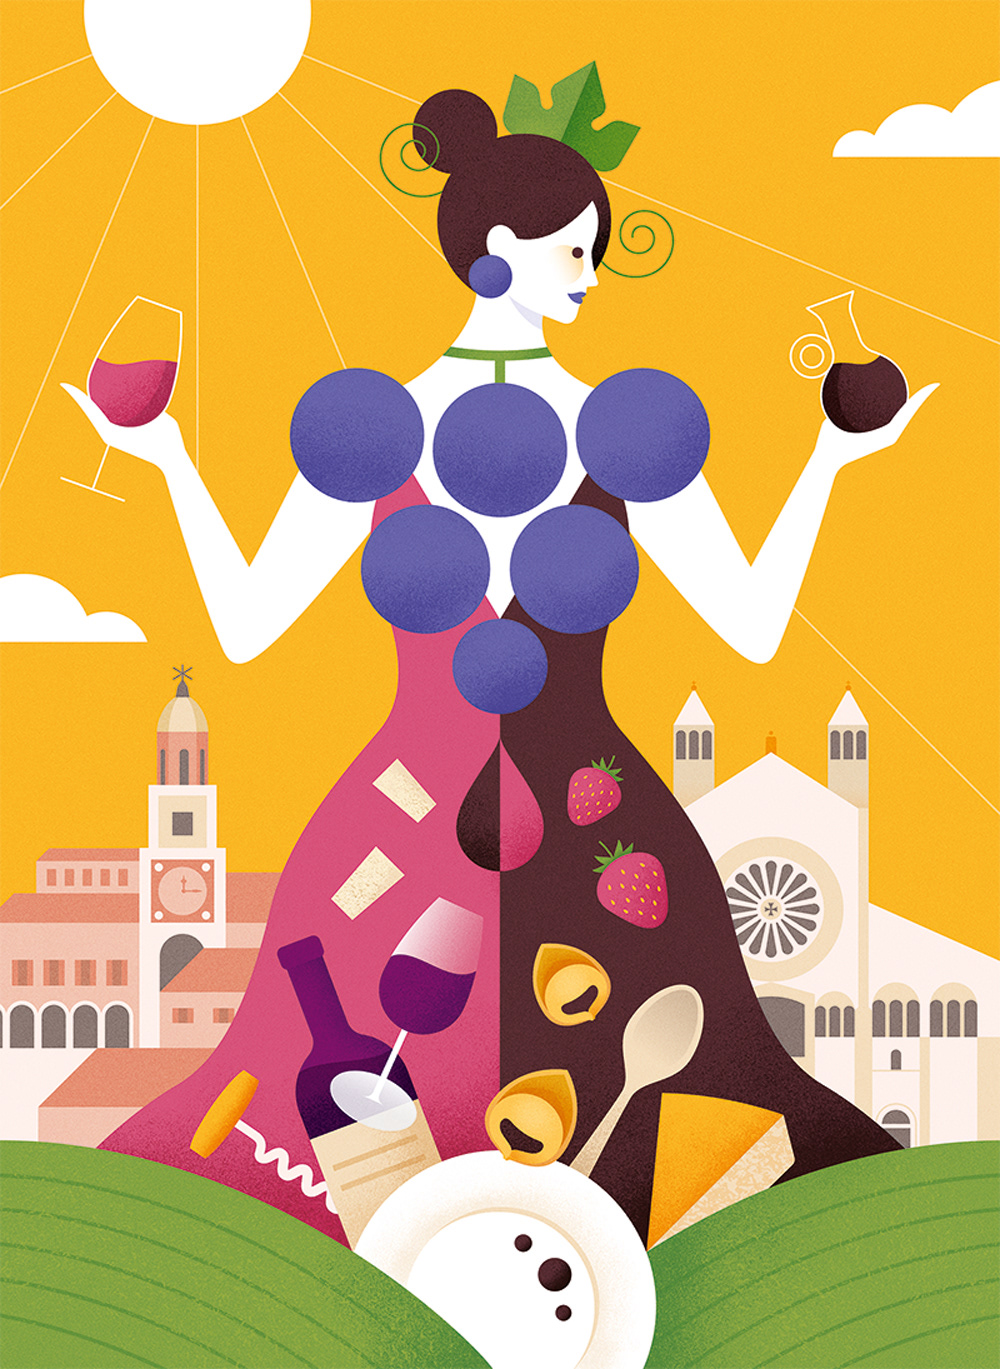 Food  Italy wine editorial Editorial Illustration magazine Digital Art  vector